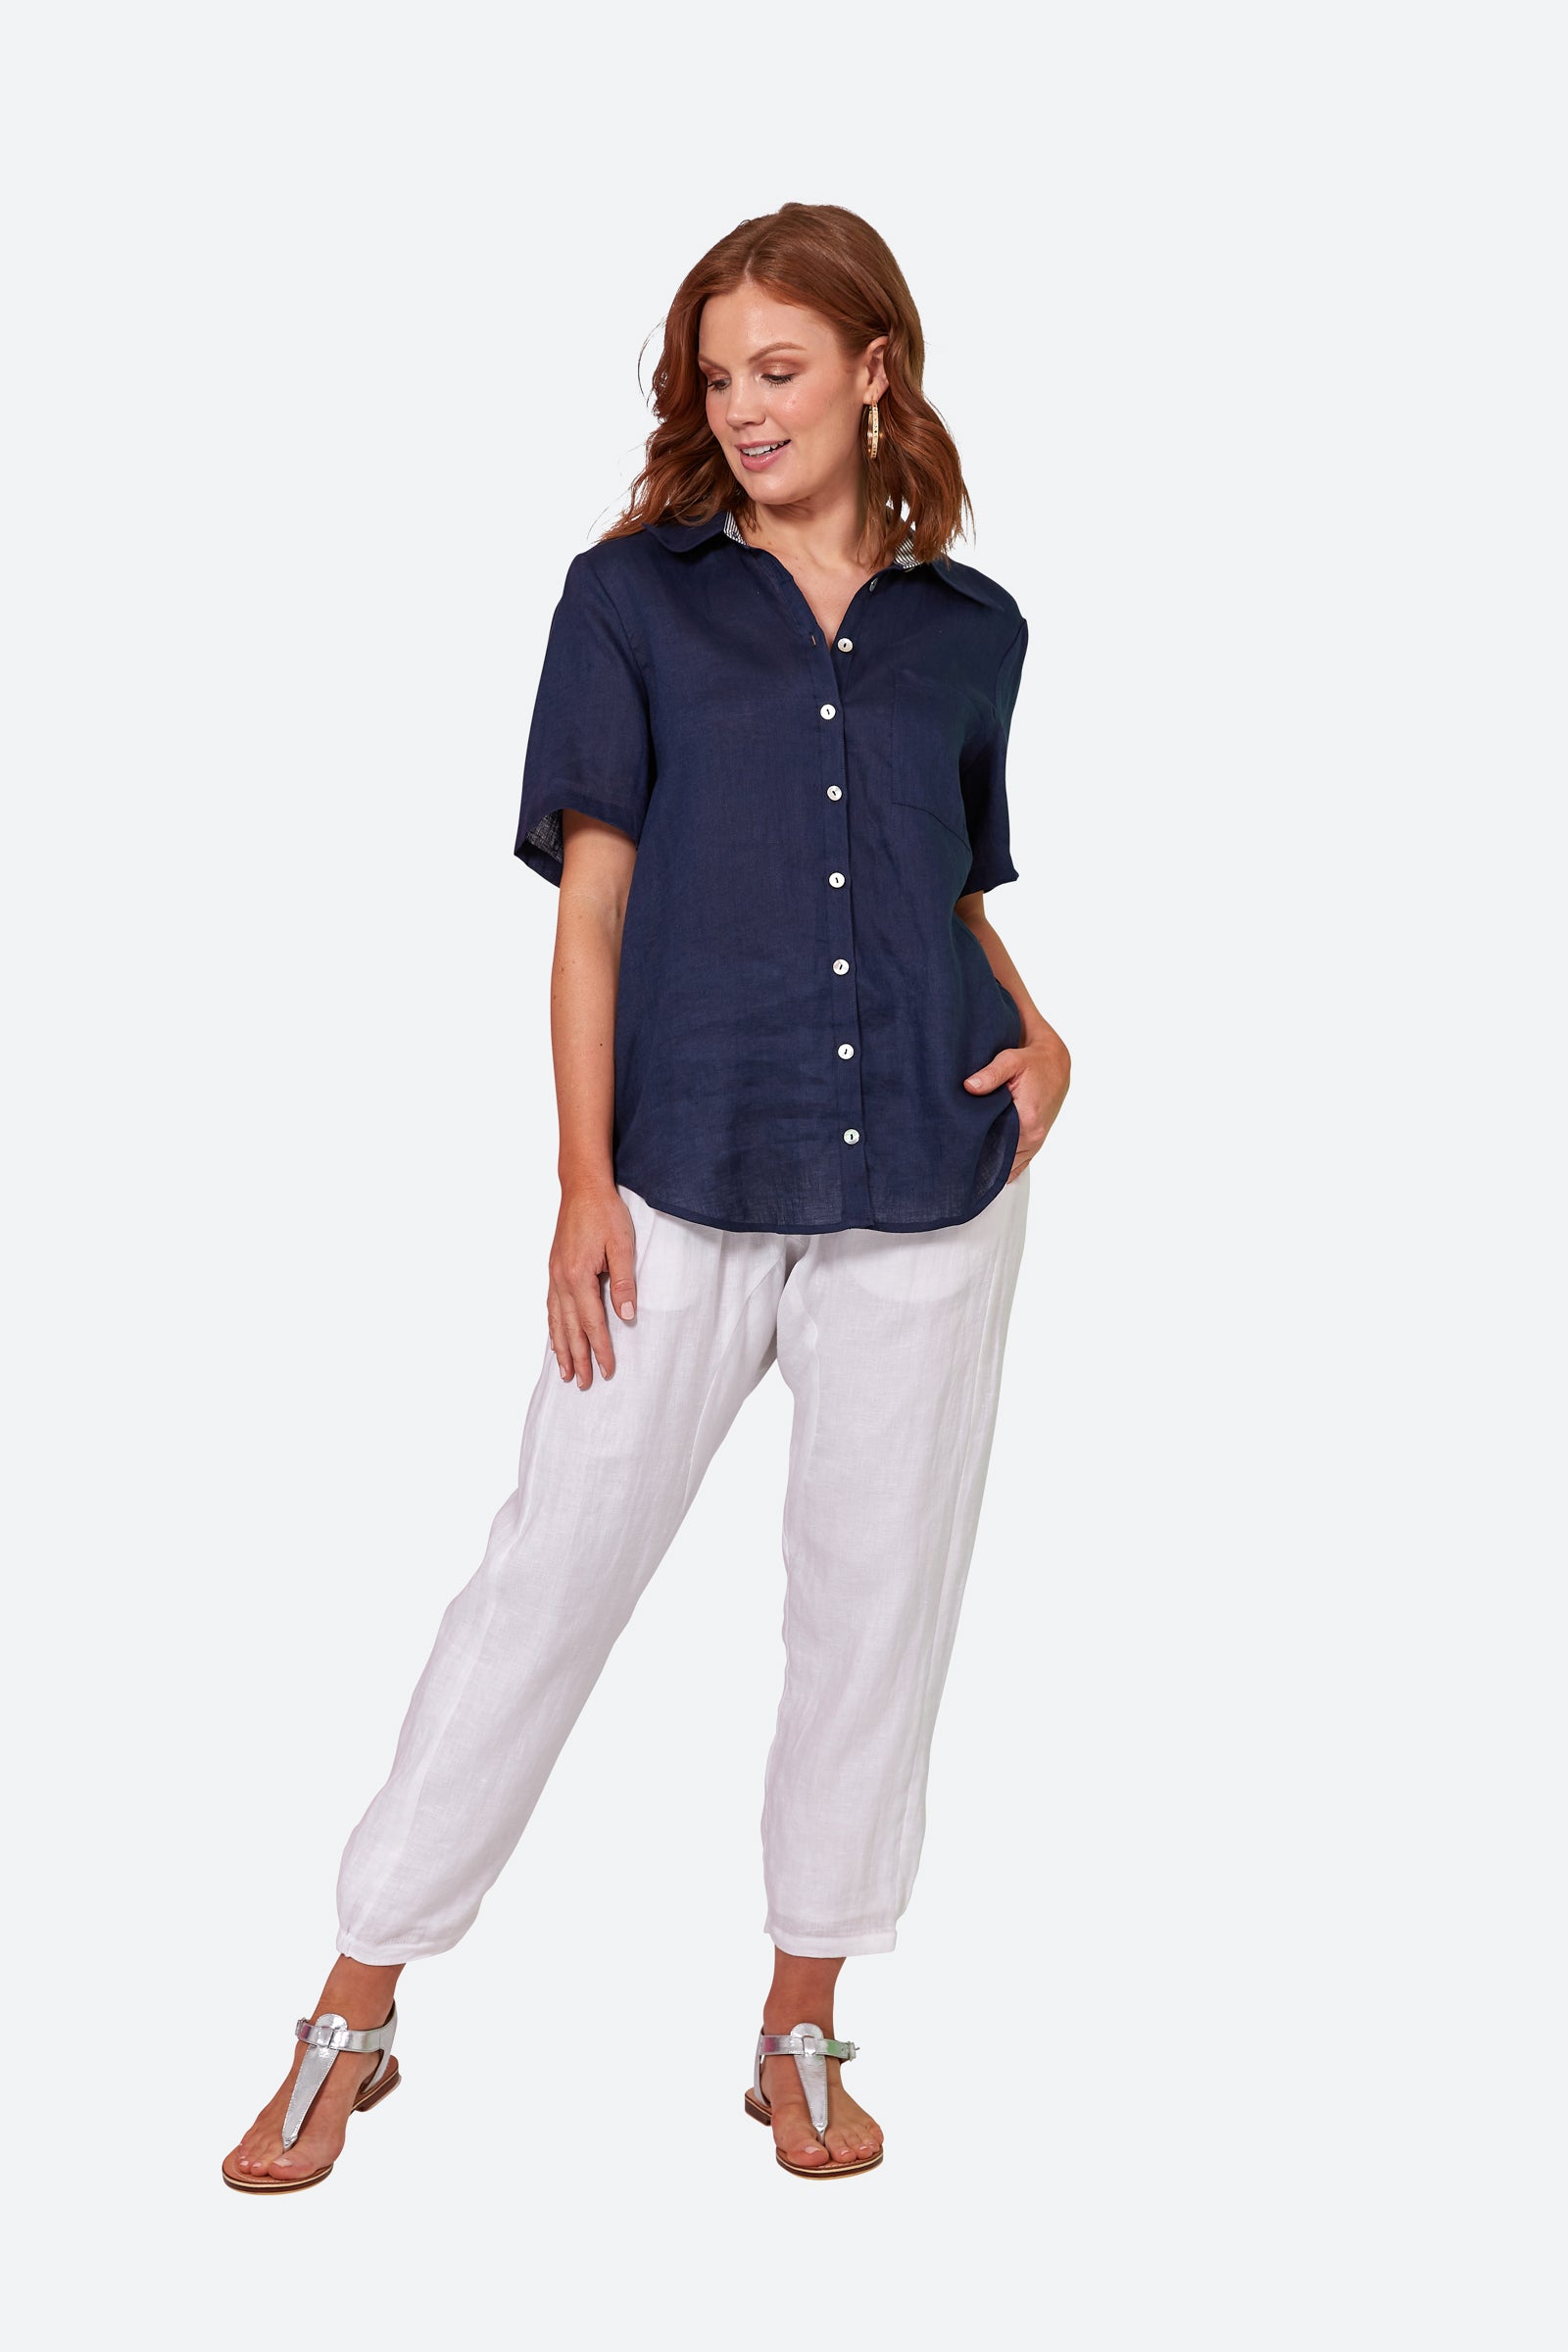 La Vie Shirt - Sapphire - eb&ive Clothing - Shirt S/S Linen